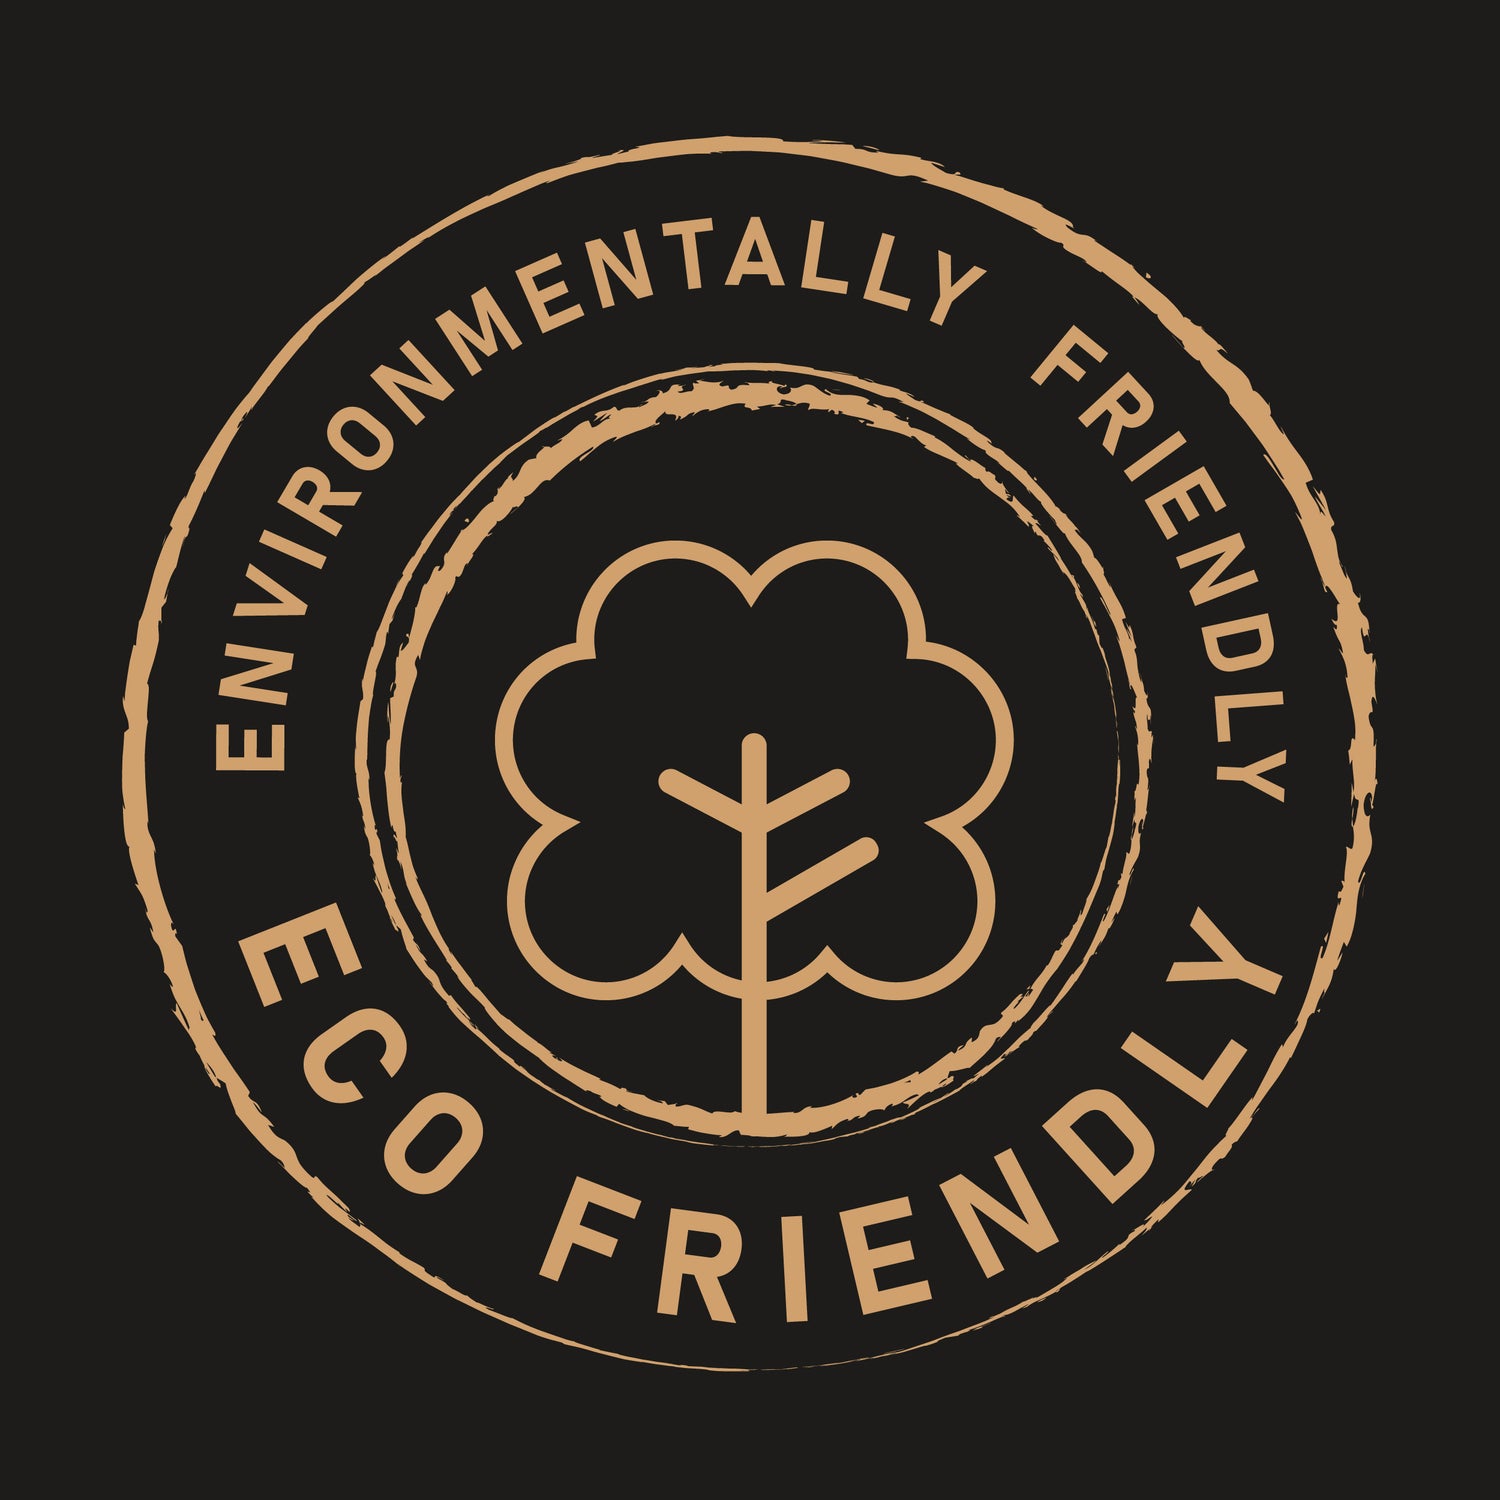 Elkwood Leather Eco Friendly Badge Environmentally Friendly